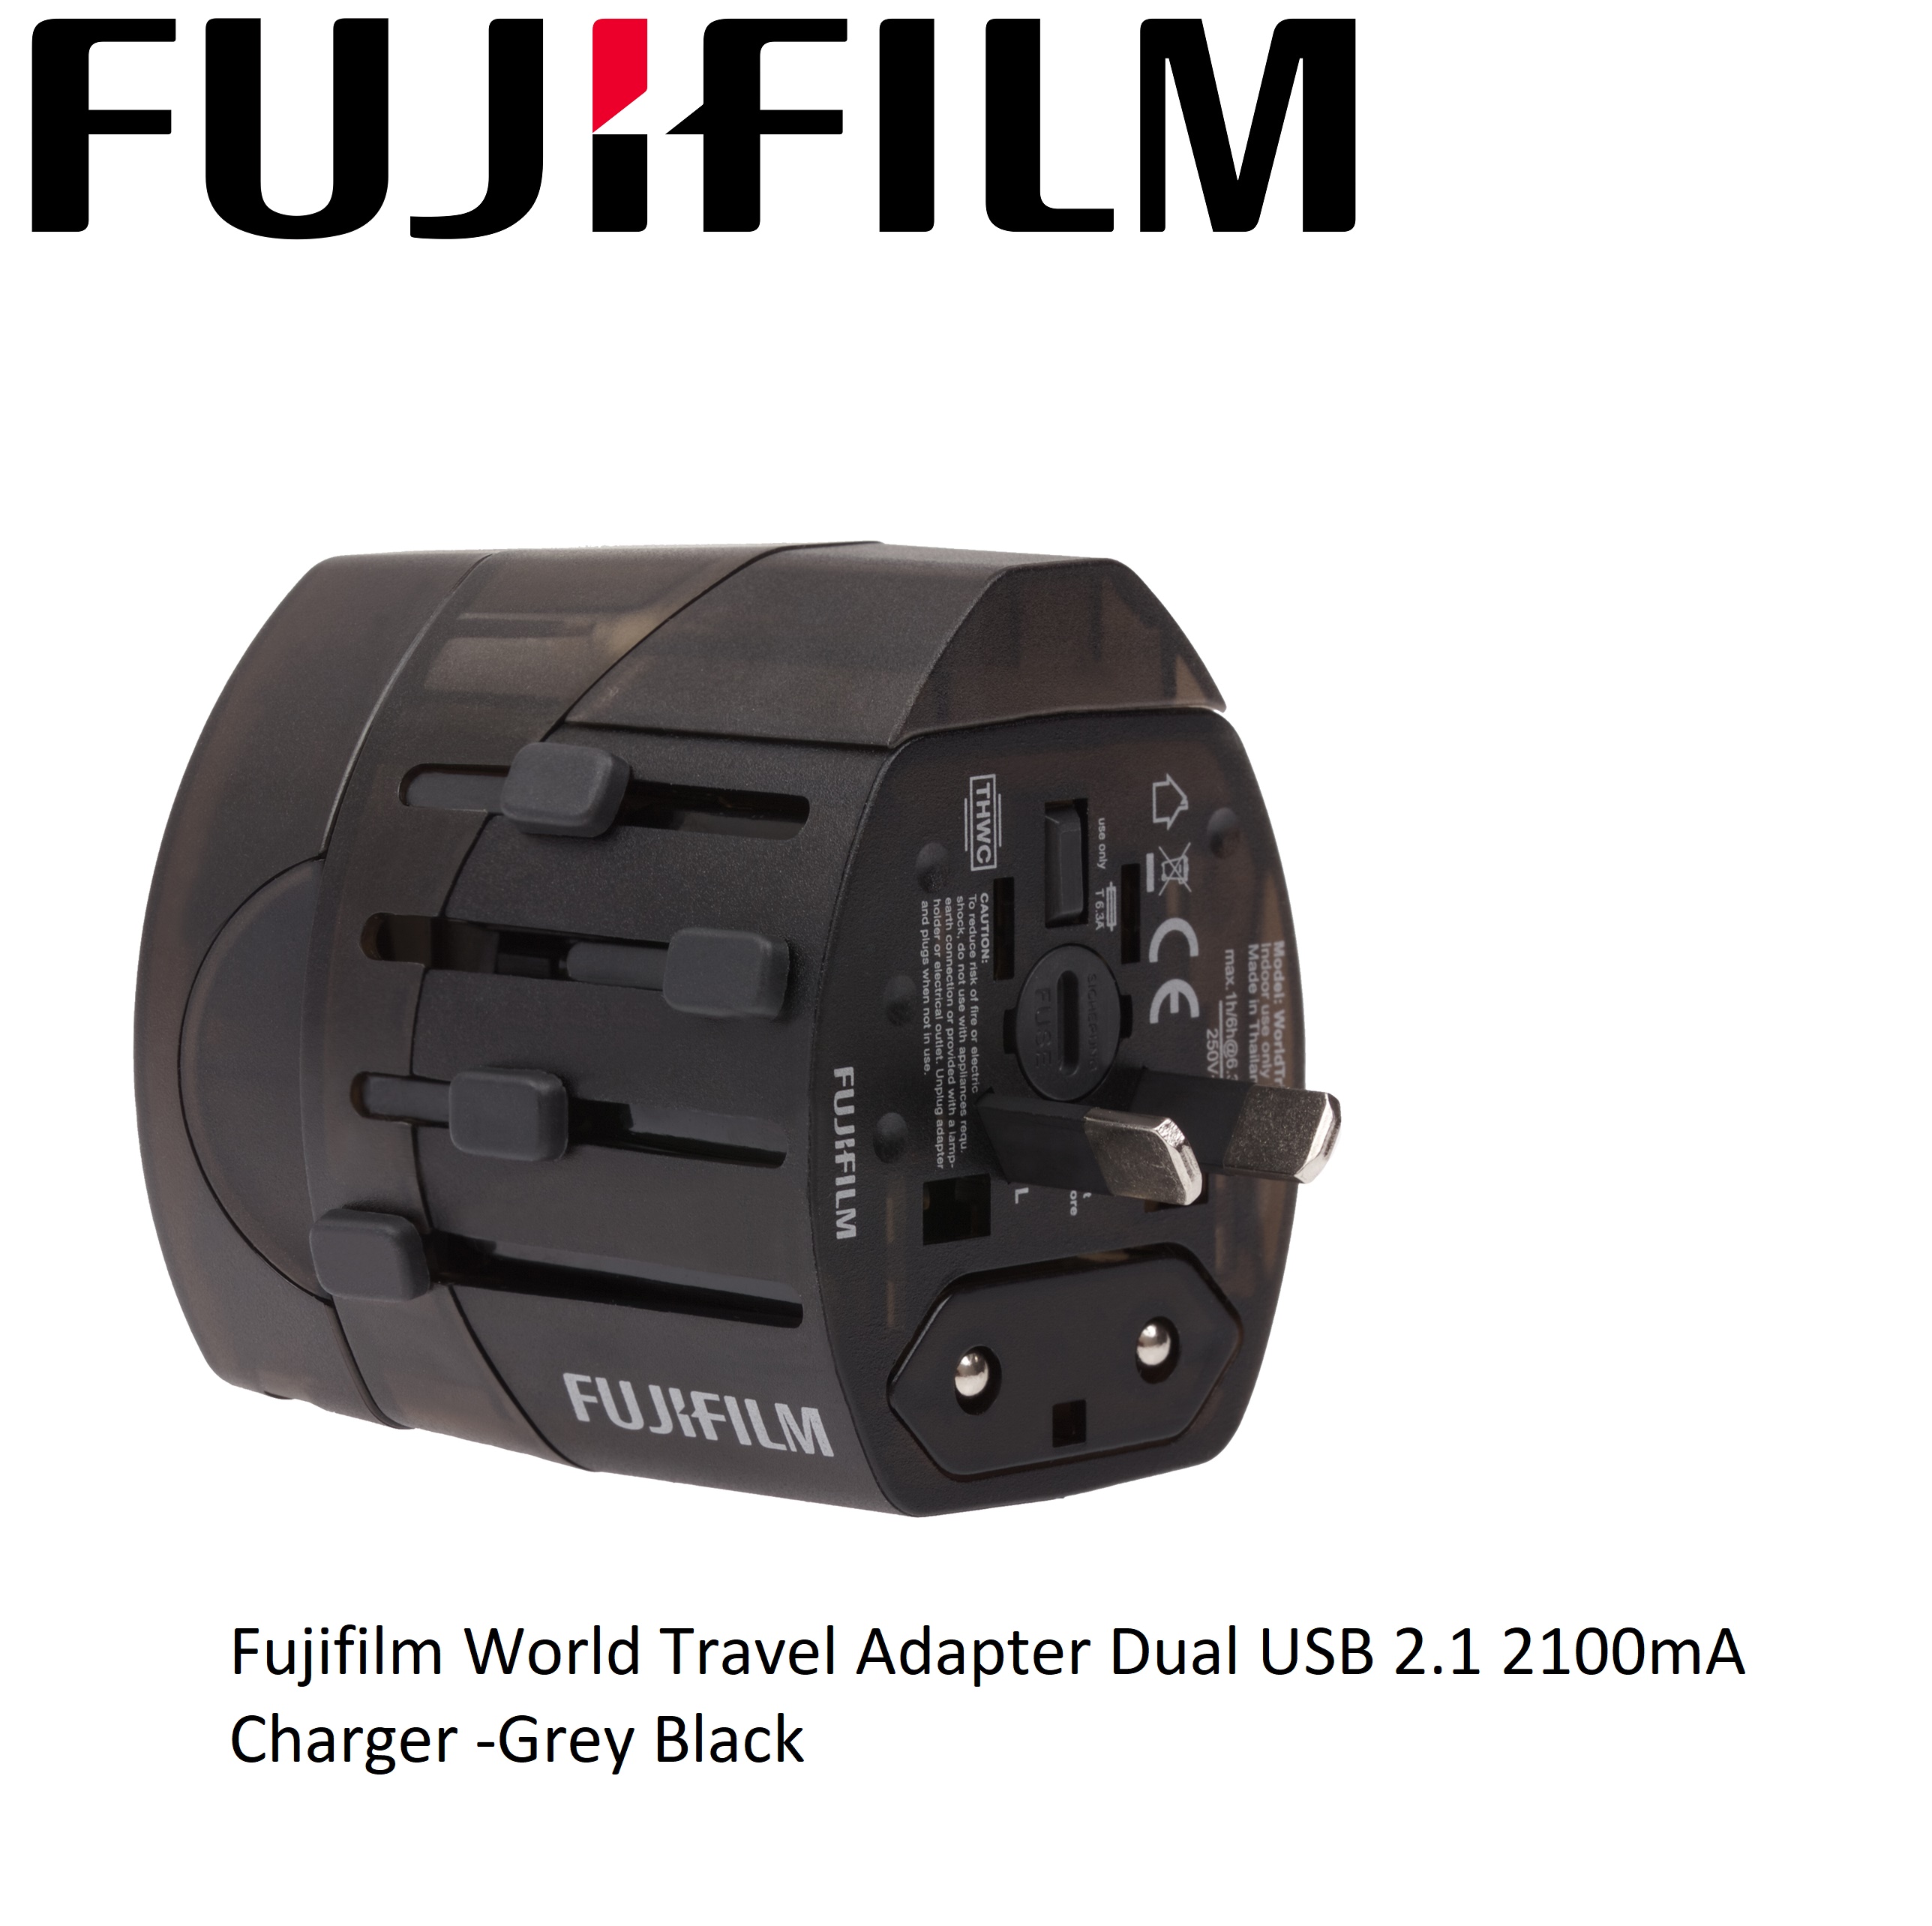 fujifilm world travel adapter